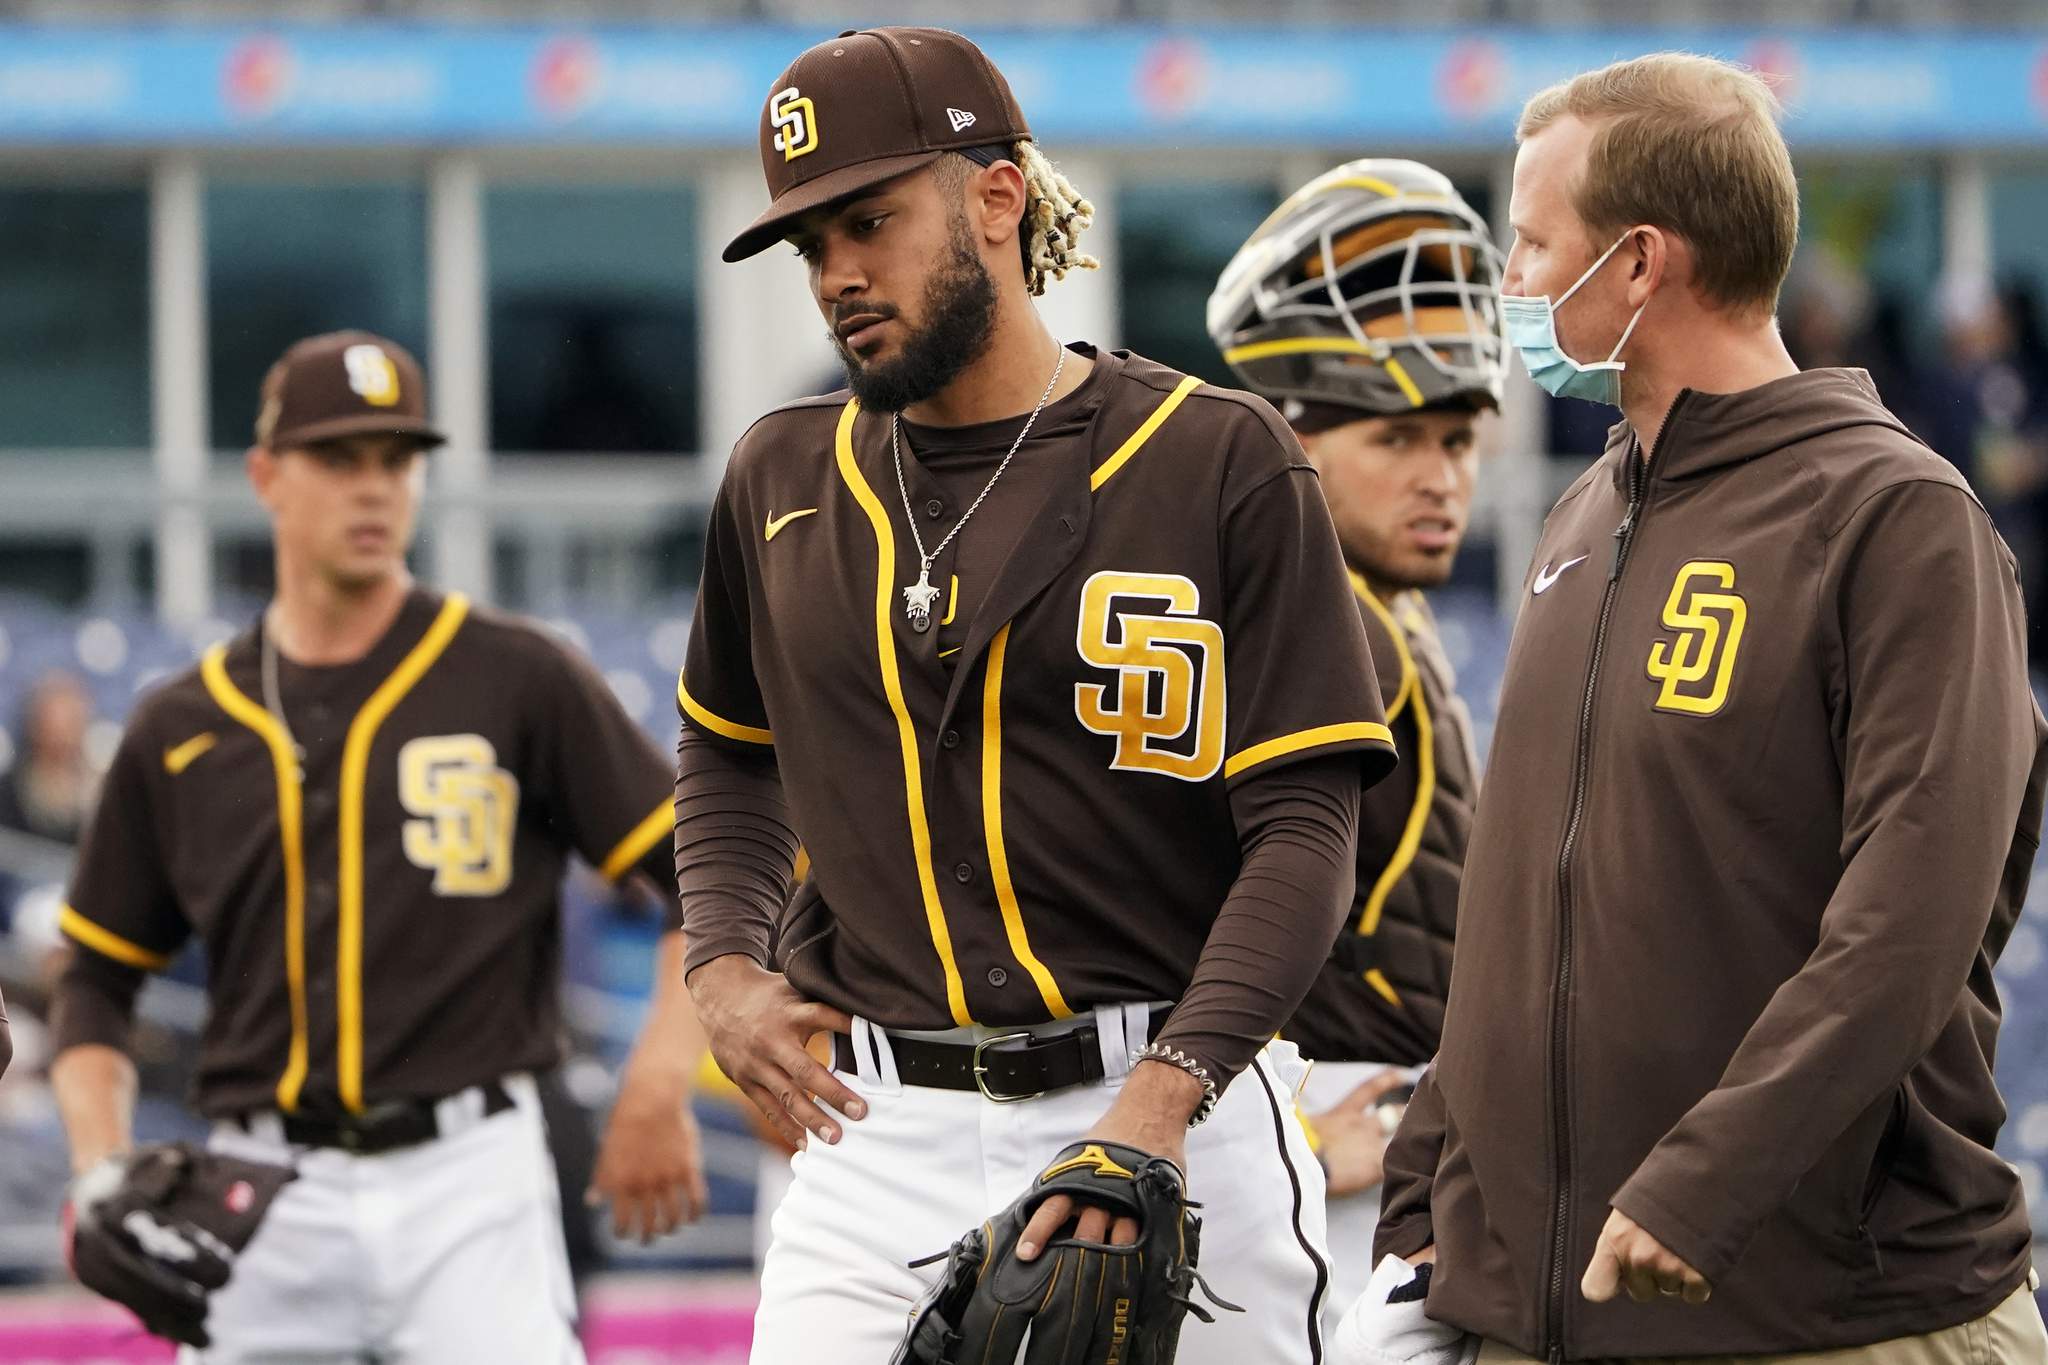 Padres star Tatis has shoulder discomfort, to be reevaluated